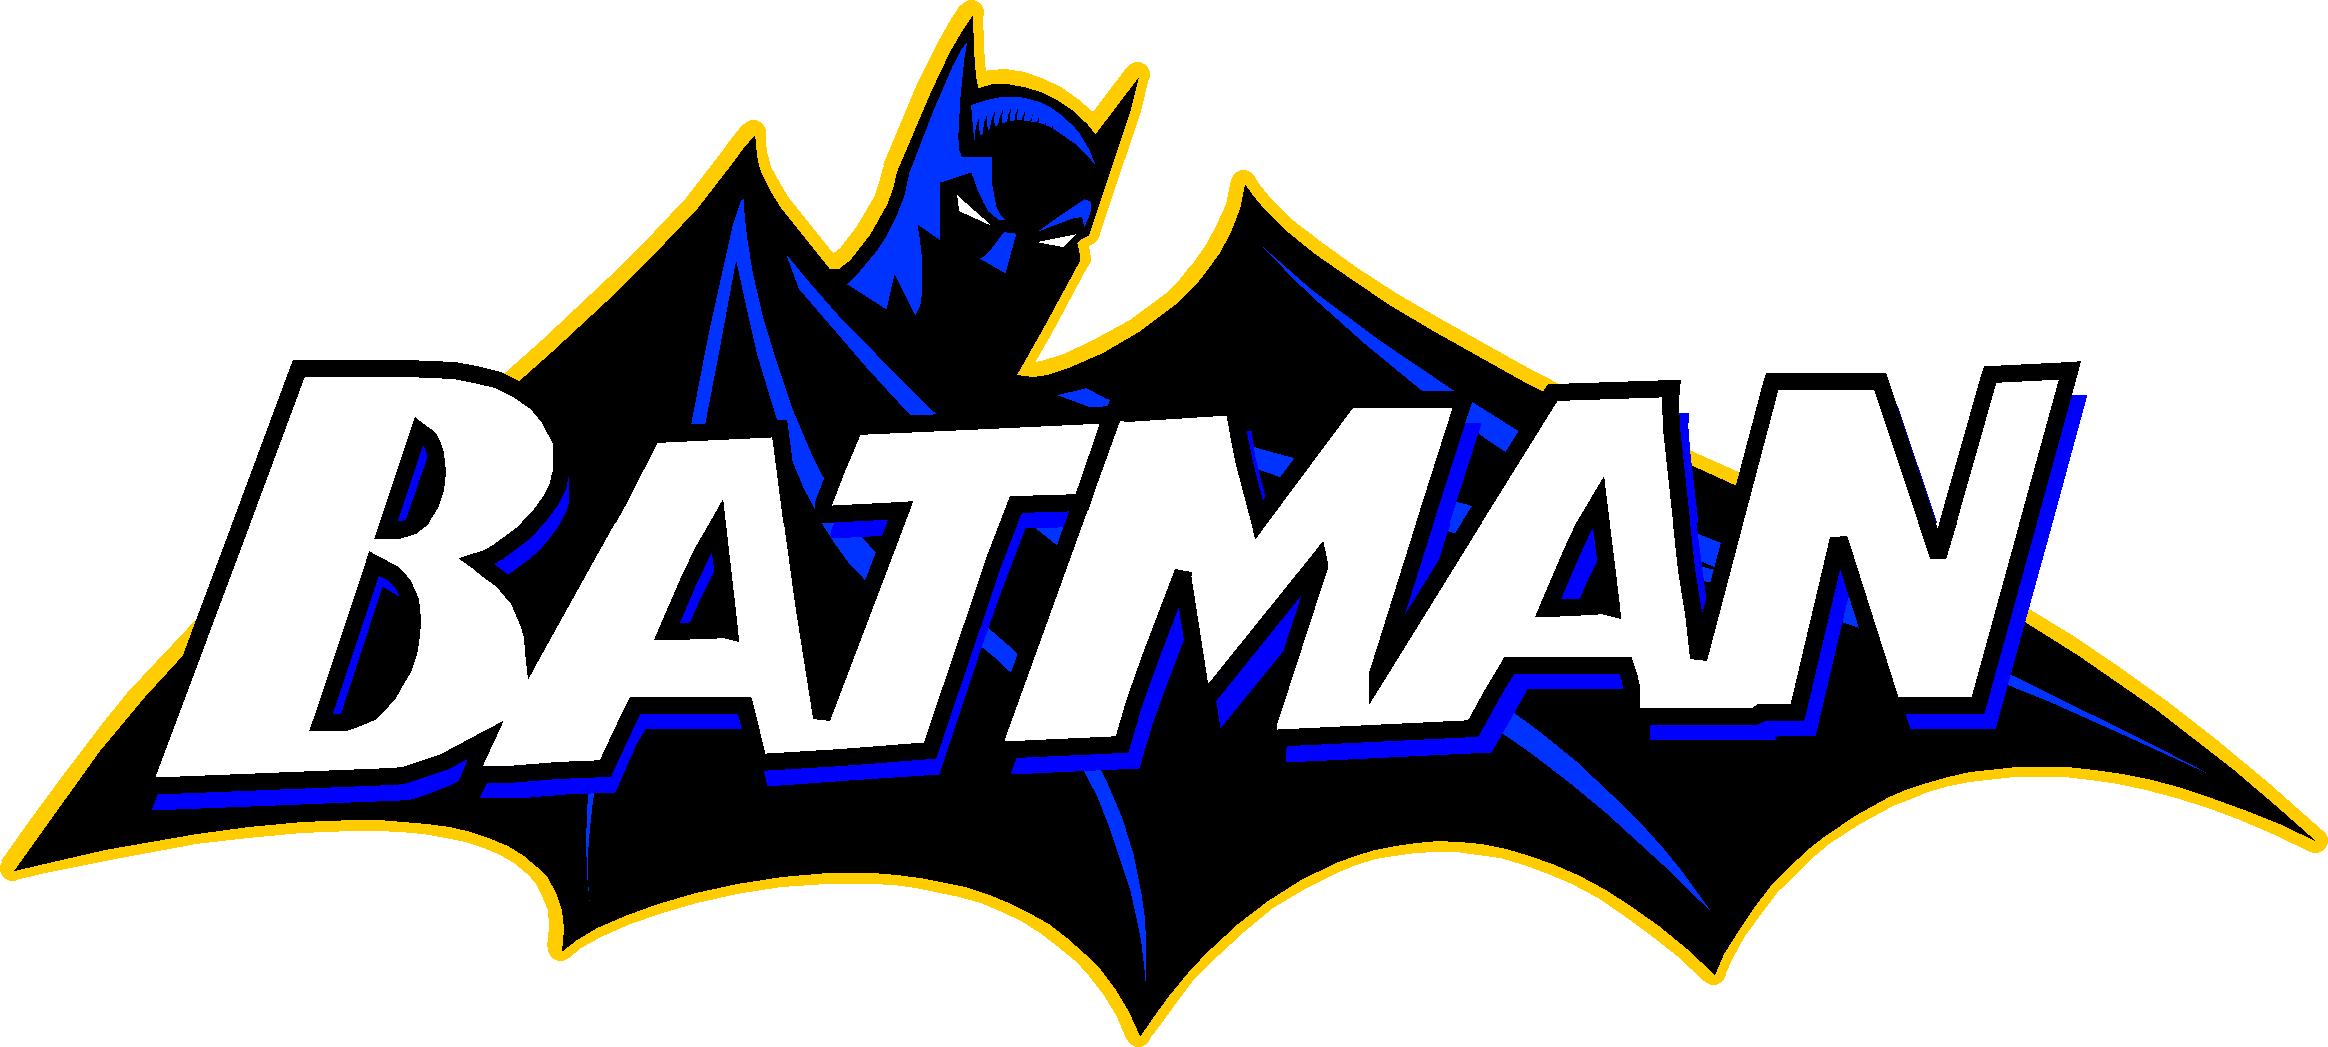 Batman title logo : The Asylum - The Outhouse - The Greatest Comic 